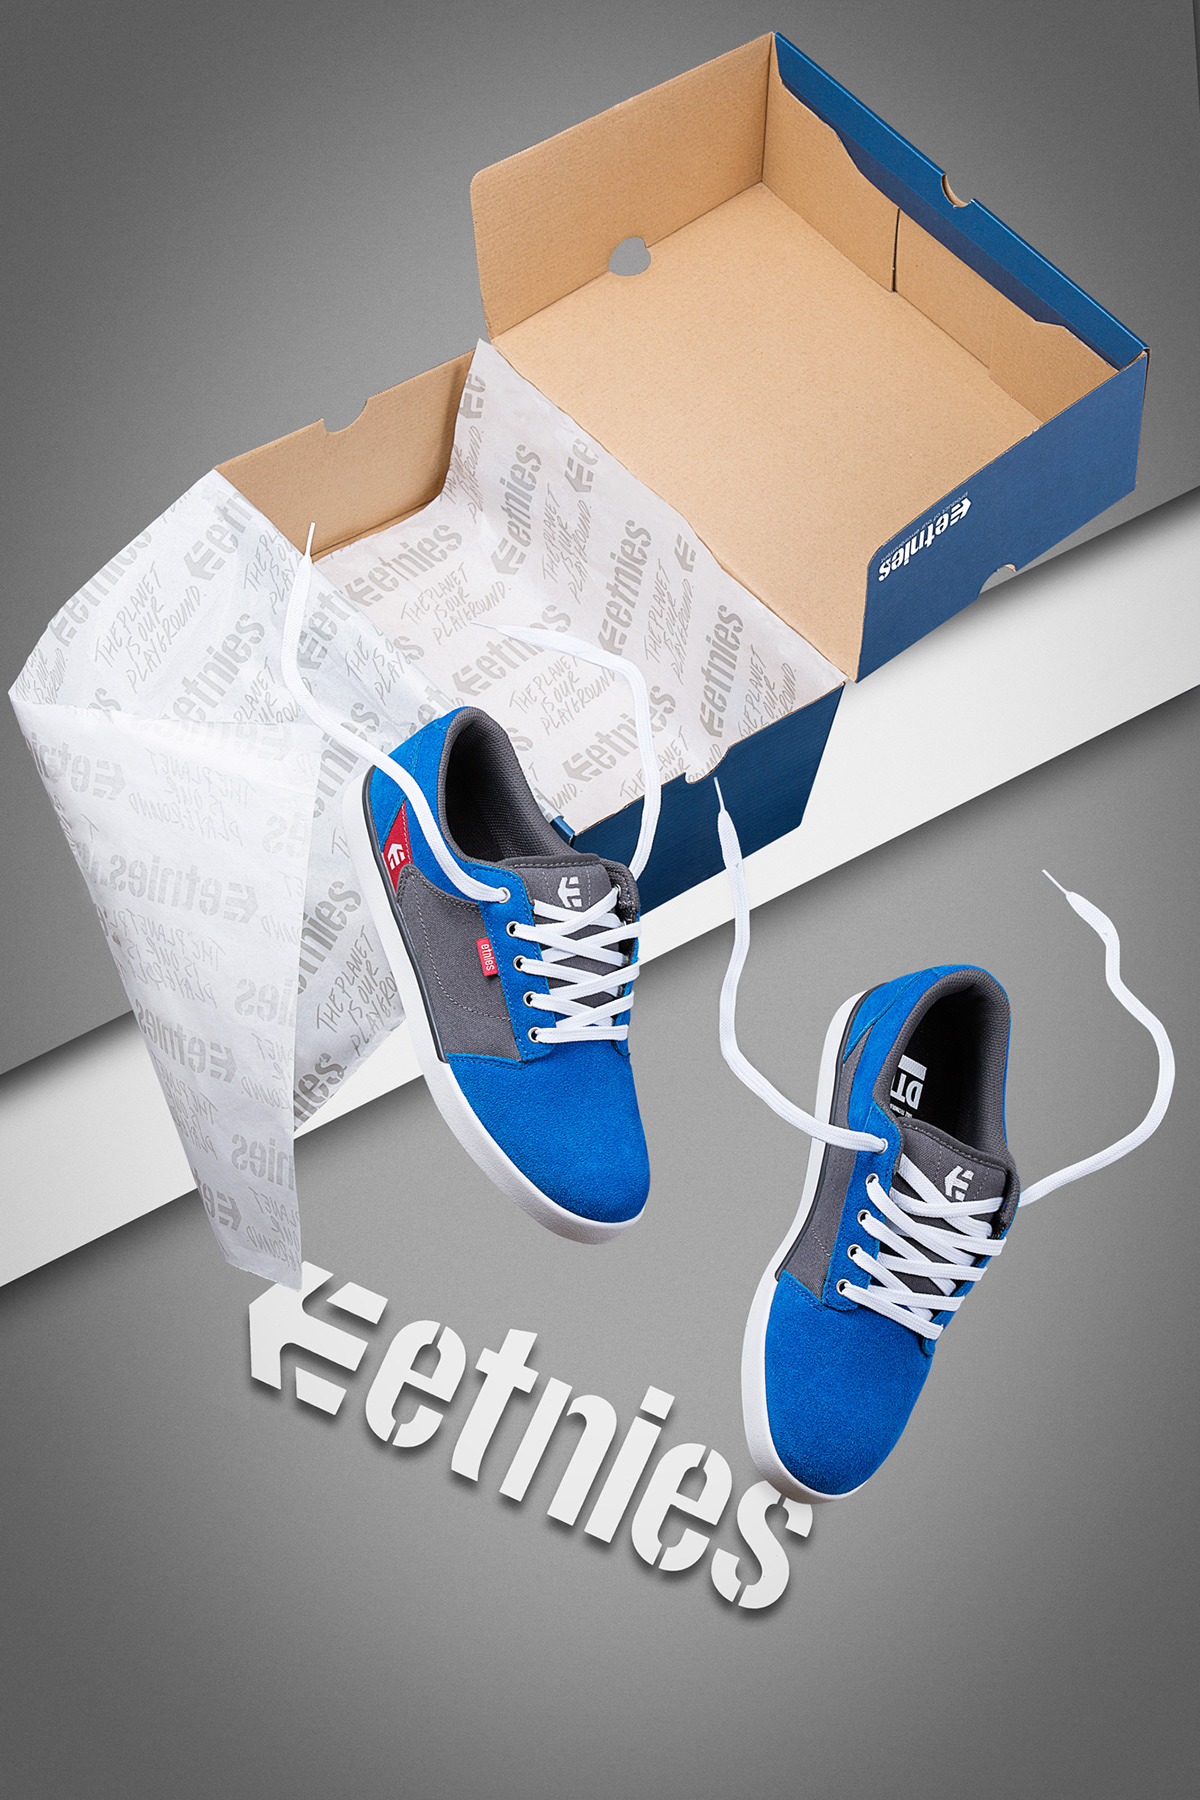 etnies shoes bmx skate blue box Fly skateboard Street sport xtreme